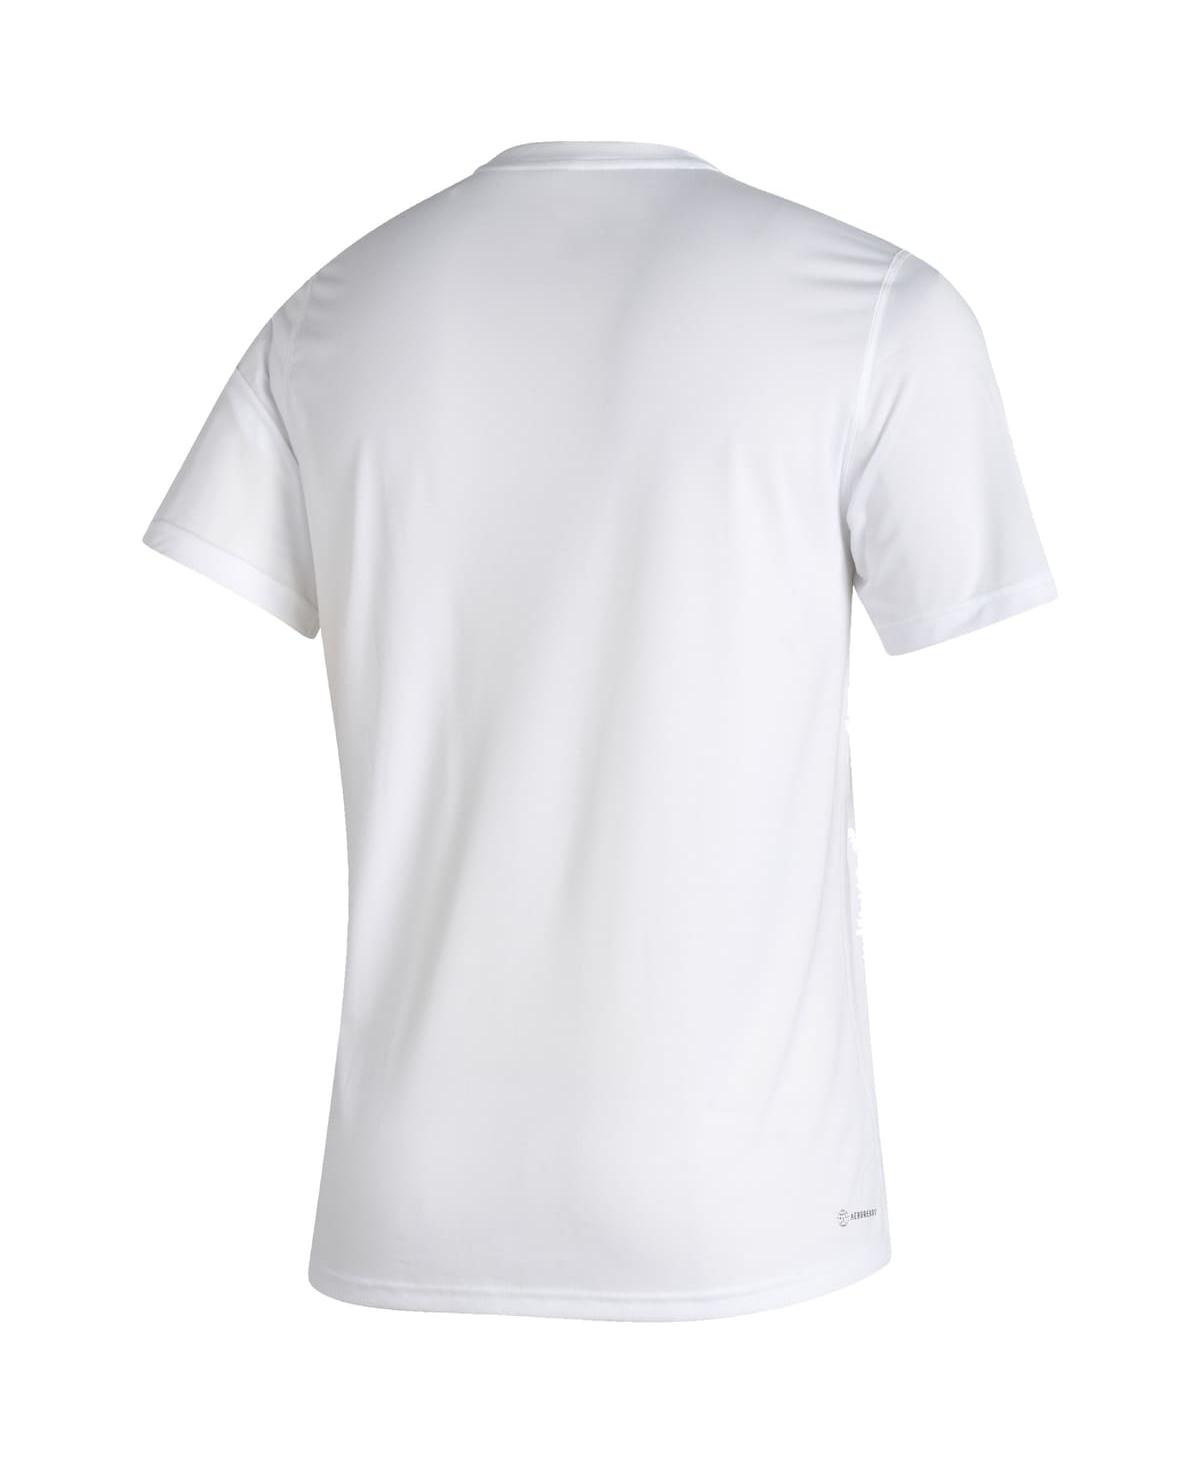 Shop Adidas Originals Men's Adidas White Texas A&m Aggies Military-inspired Appreciation Creator T-shirt